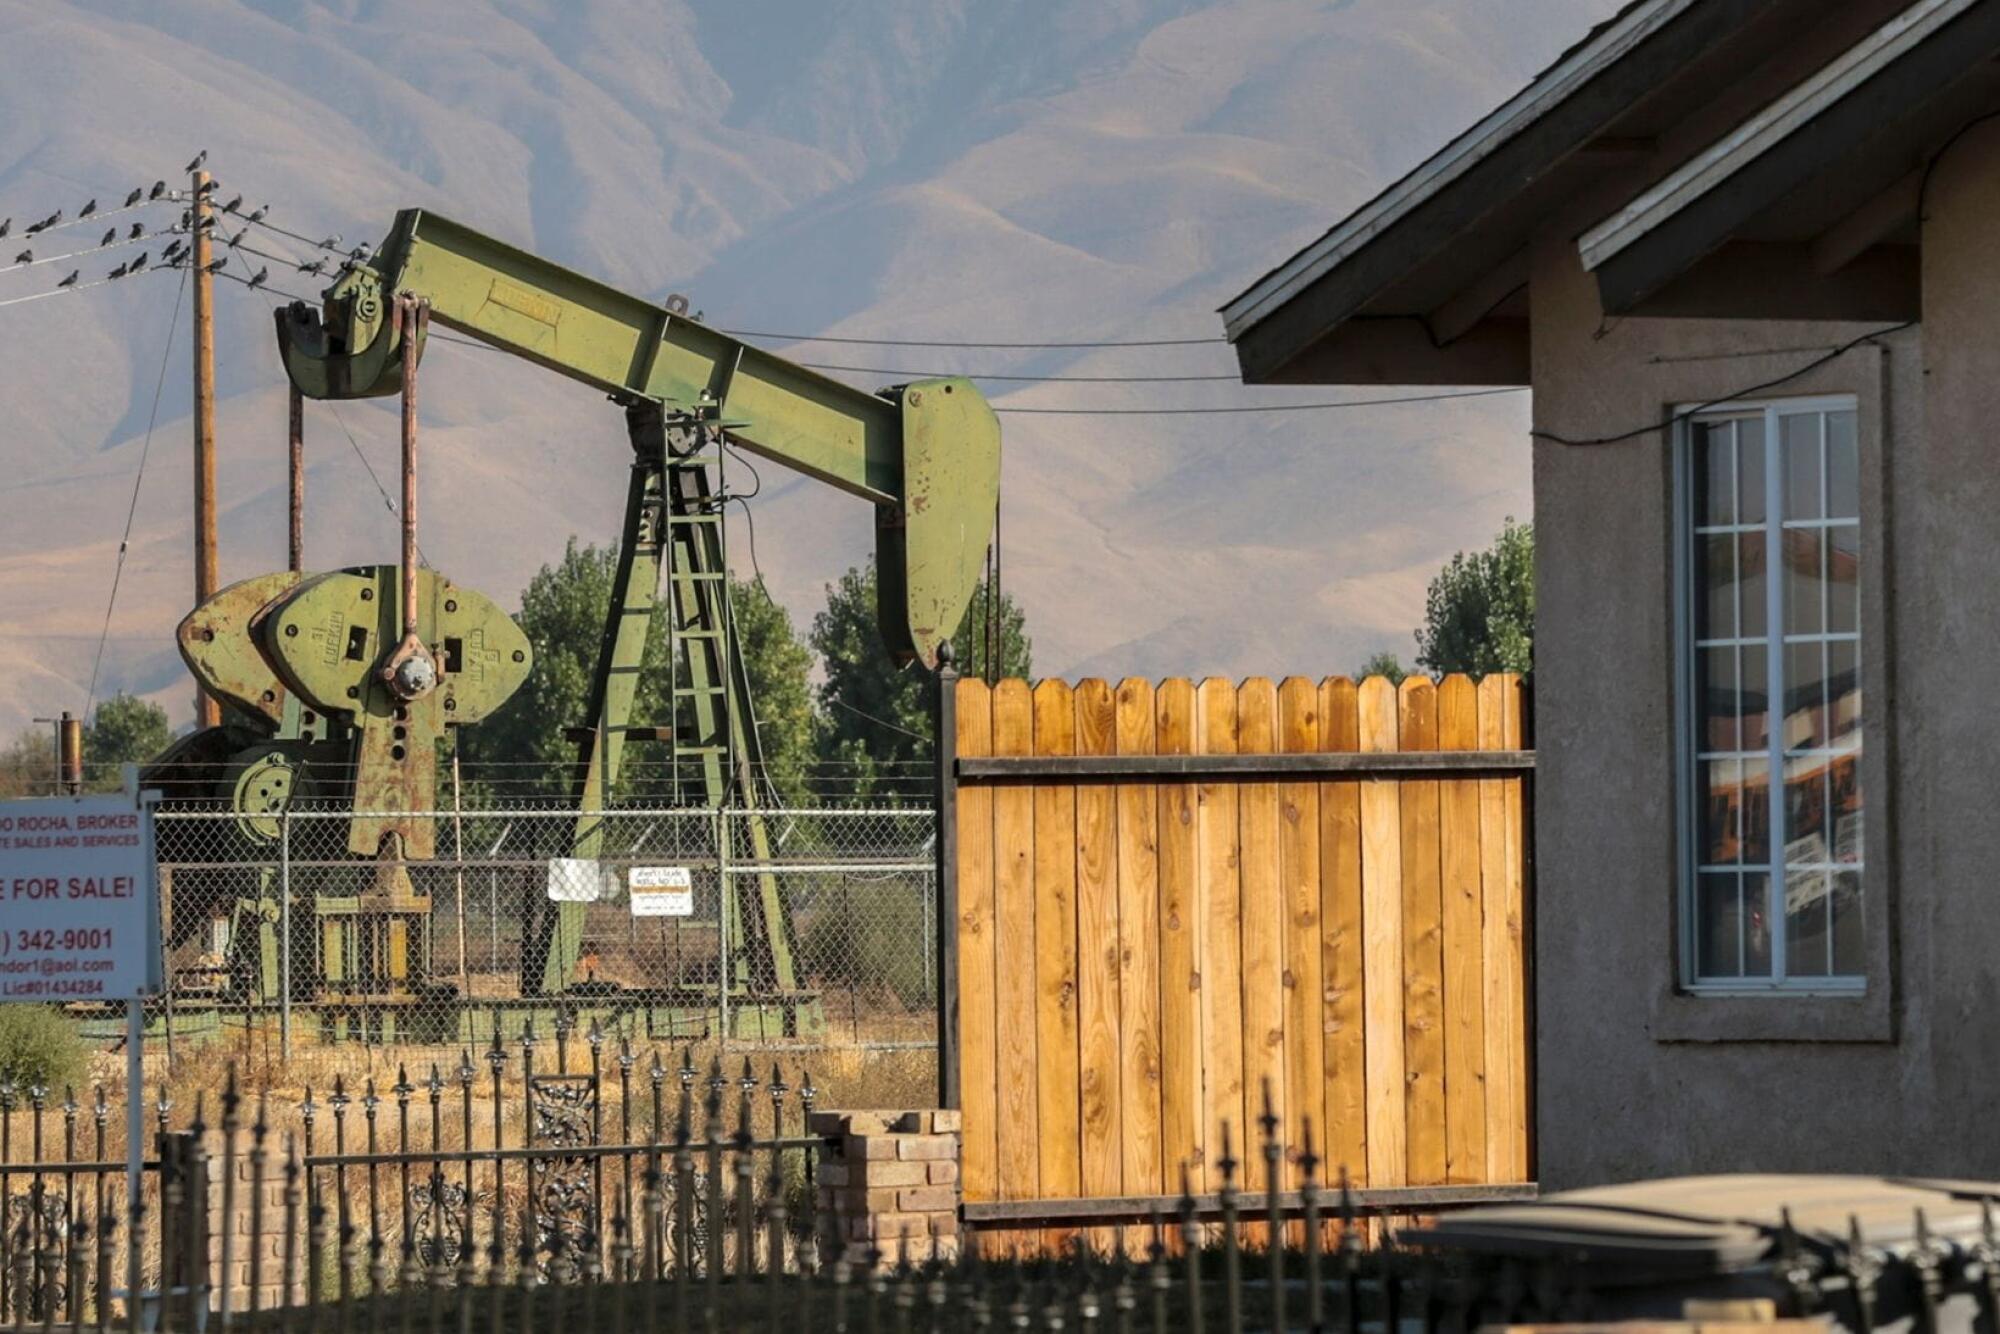 Idle oil well behind a fence near a house.